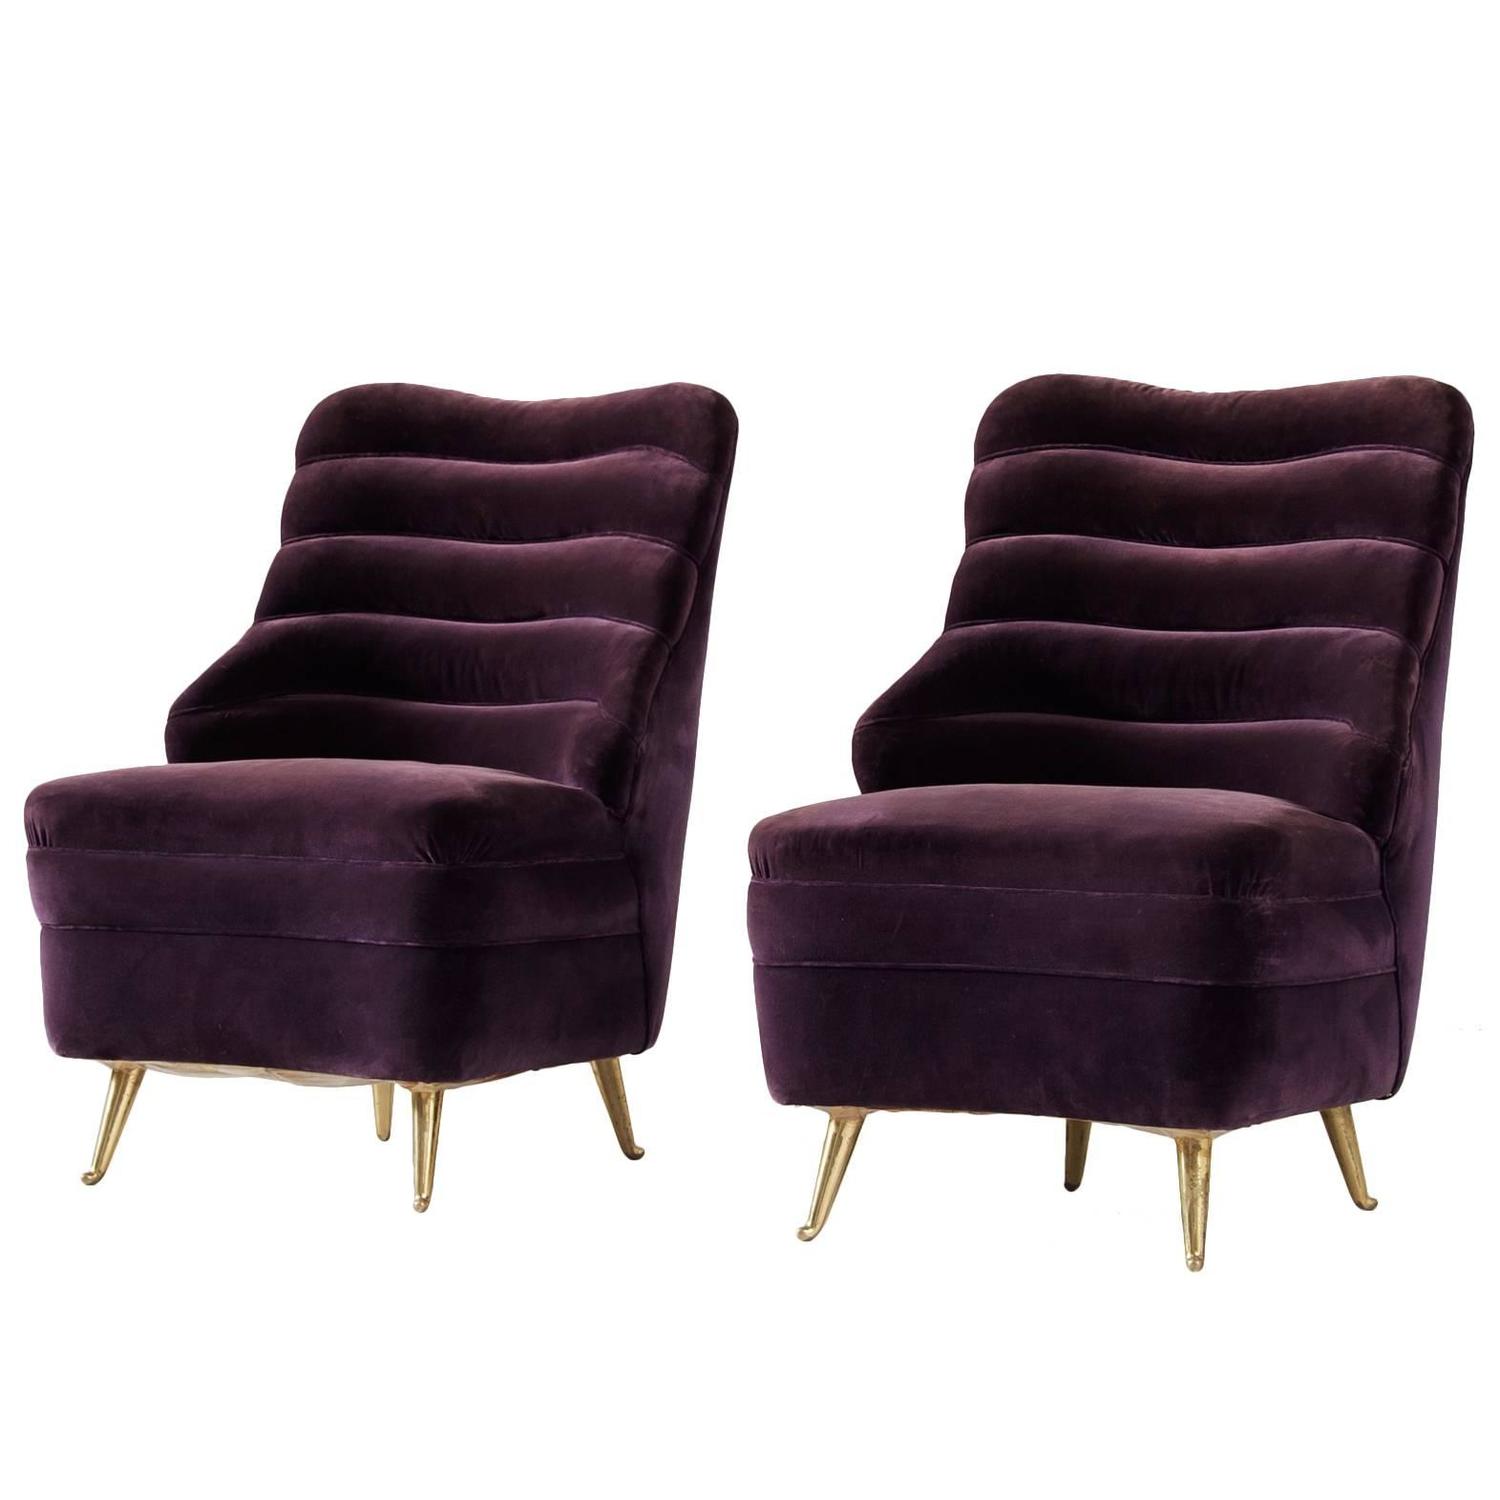 Pair of Italian Purple Velvet Lounge Chairs at 1stdibs